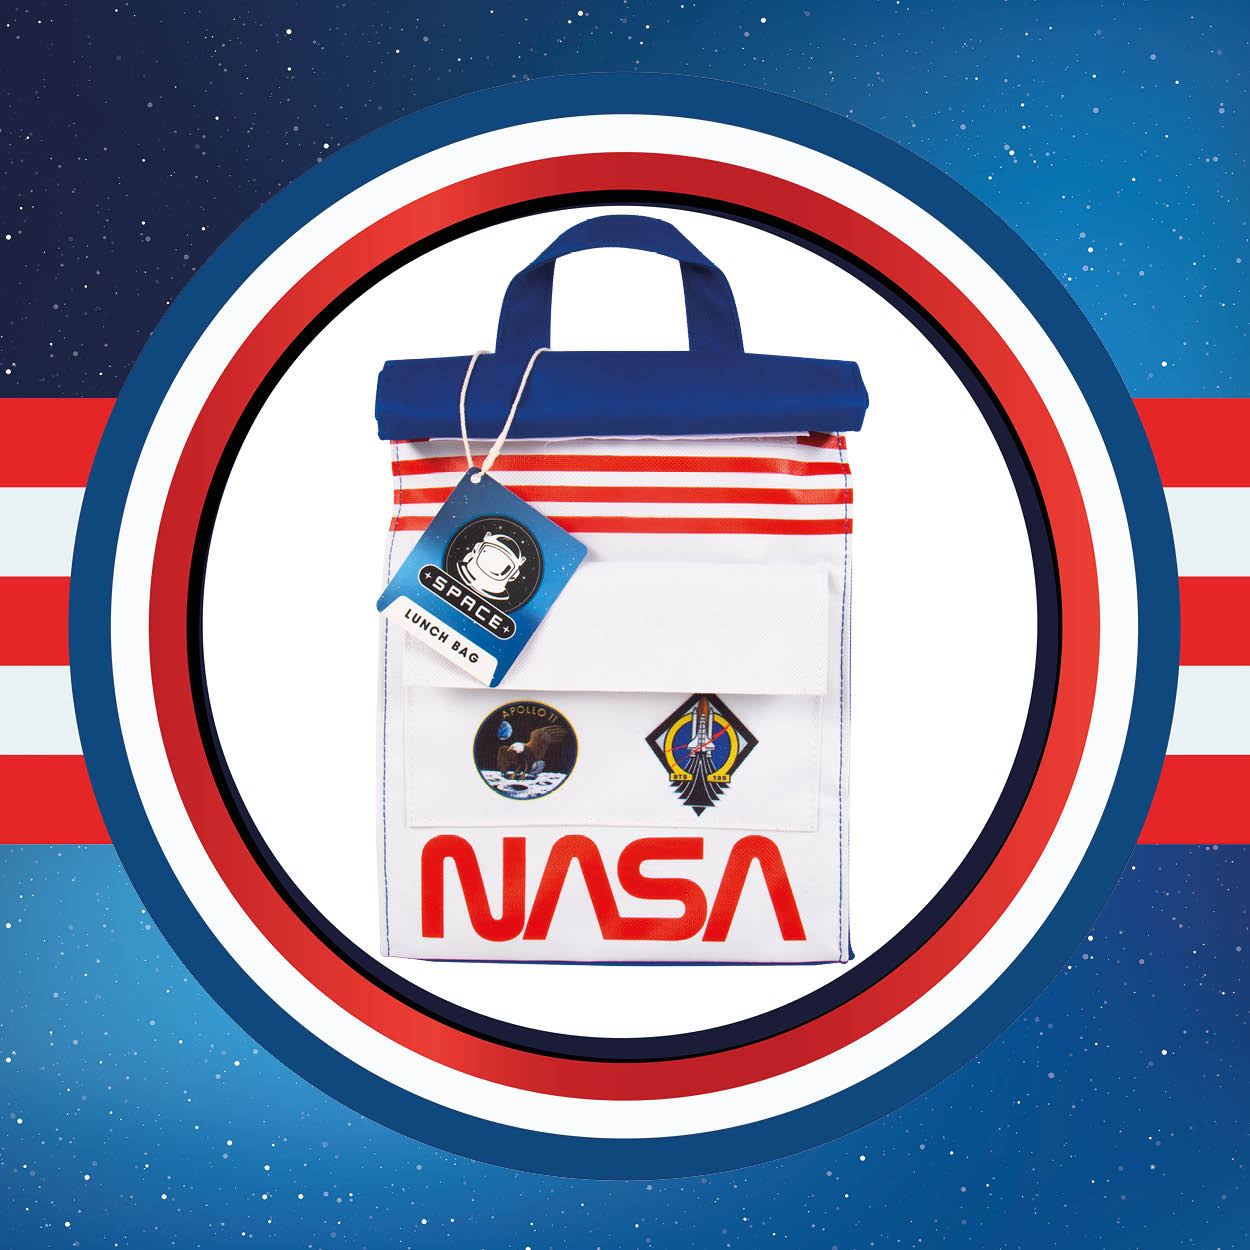 Artemis Program. We Are Going. NASA ESA Commemorative Badge